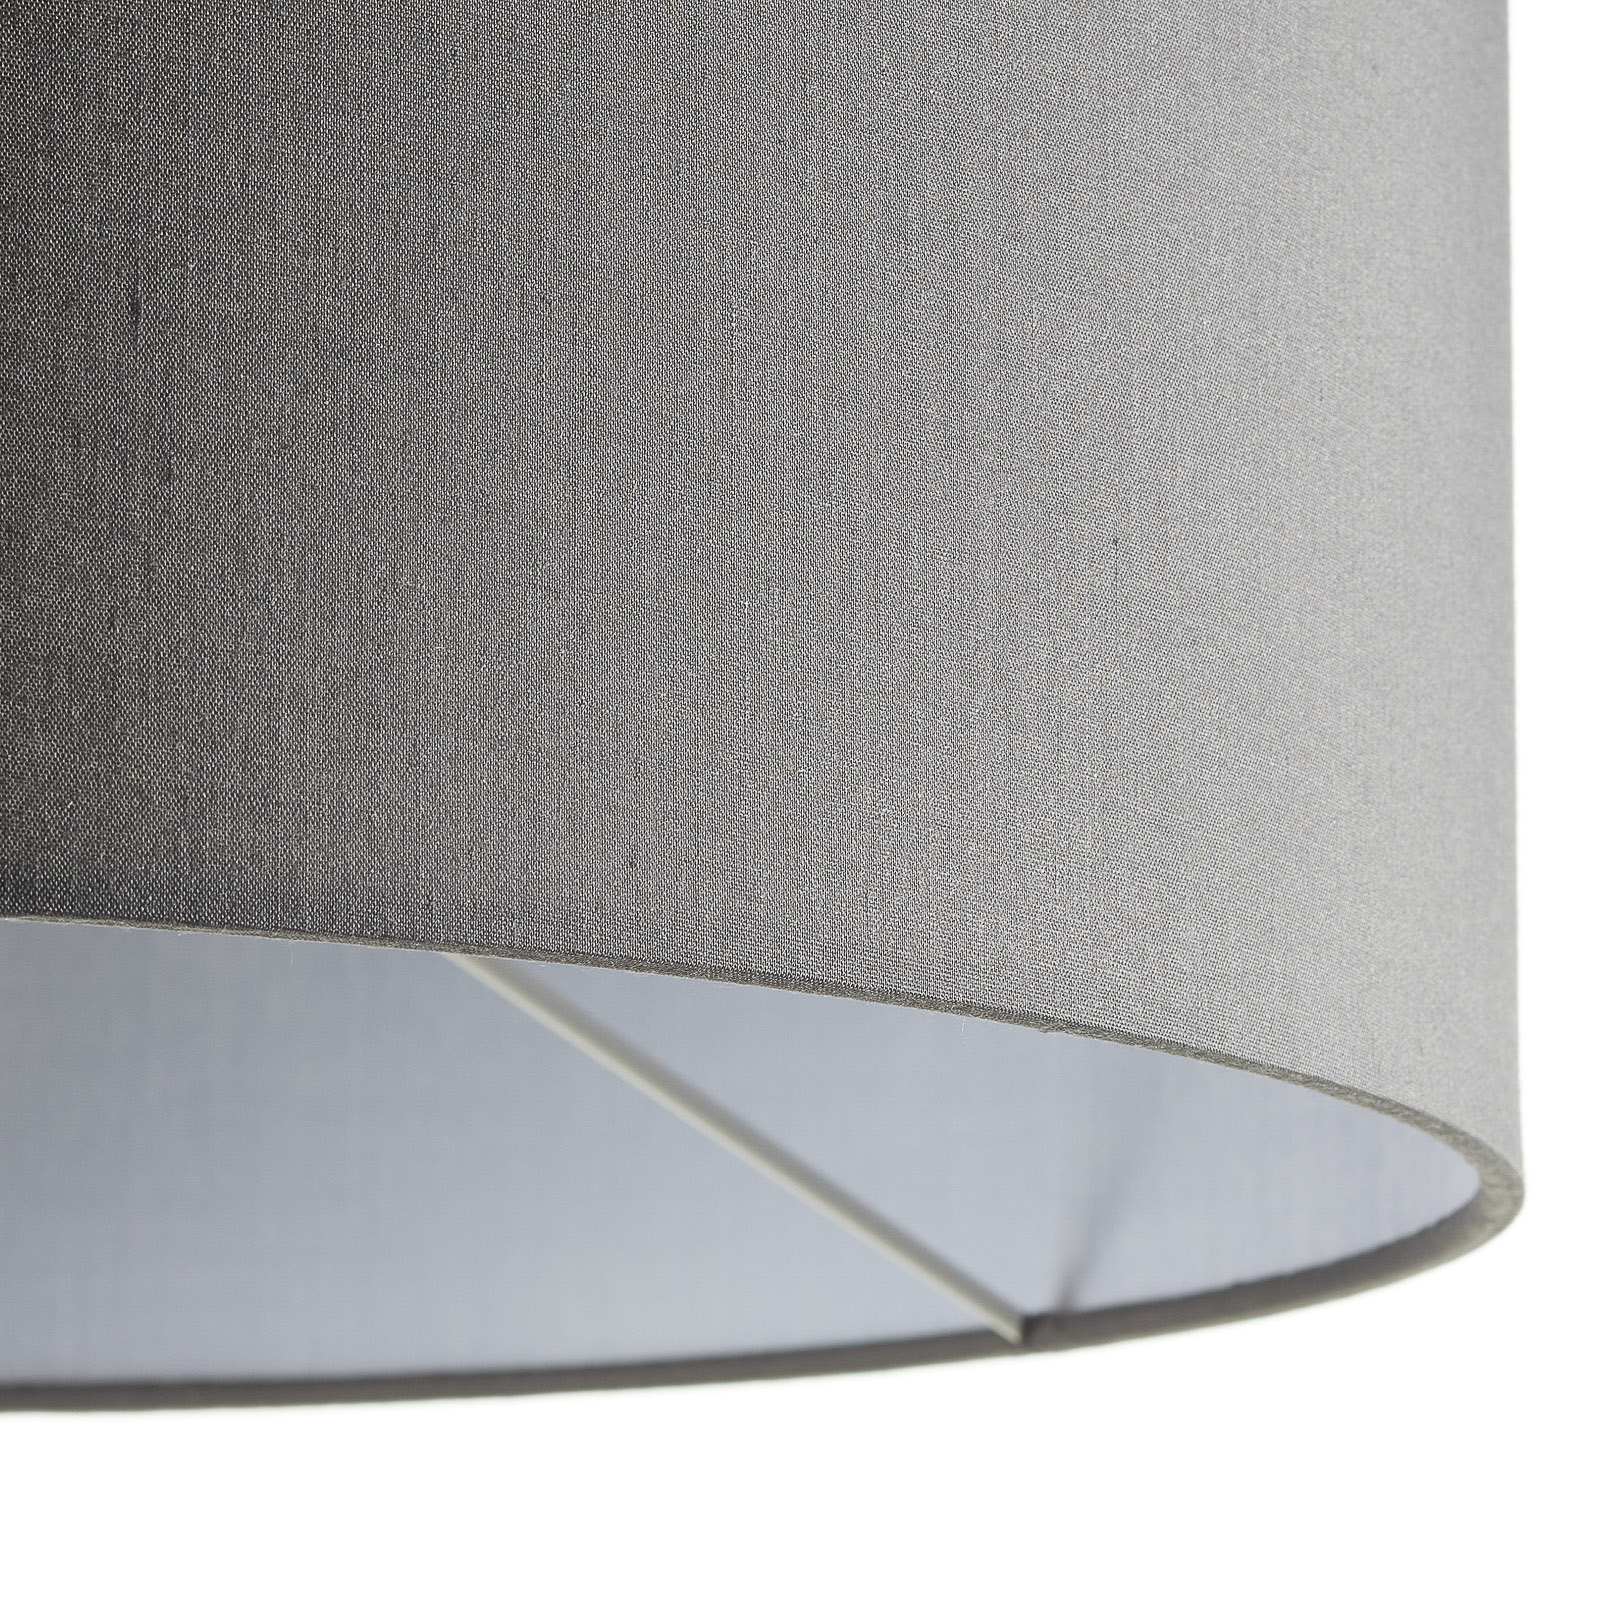 grey lampshade for floor lamp